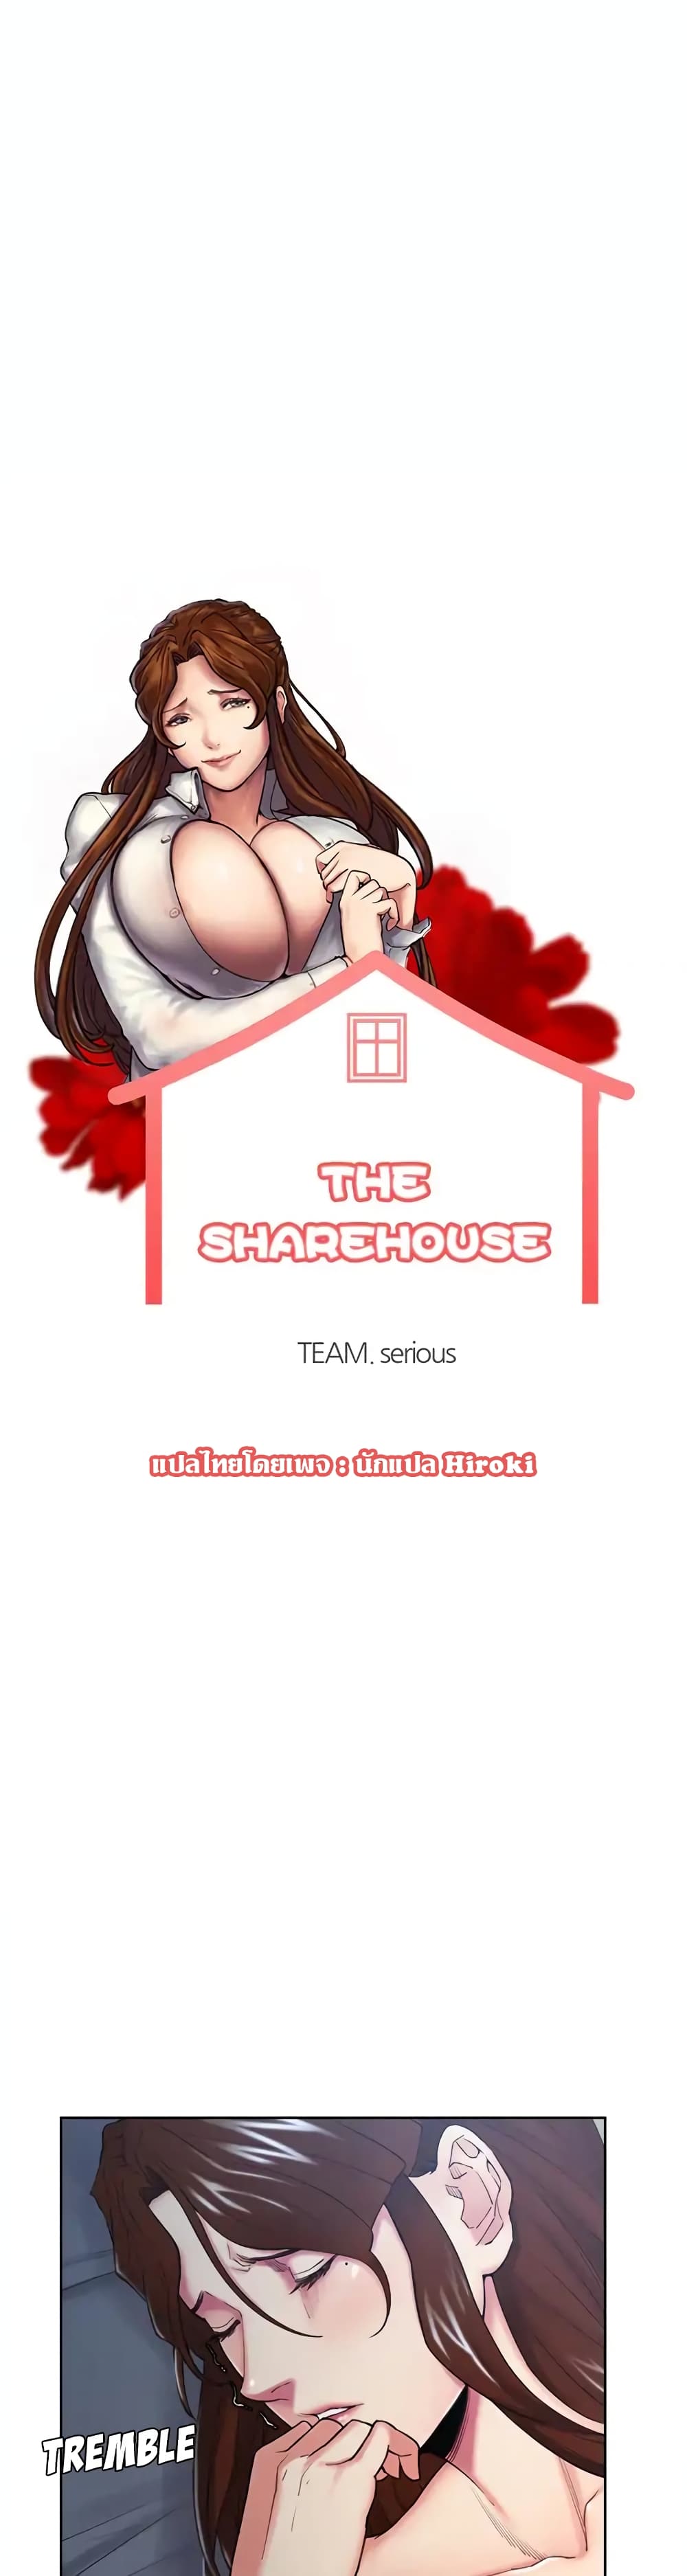 The Sharehouse 45-45